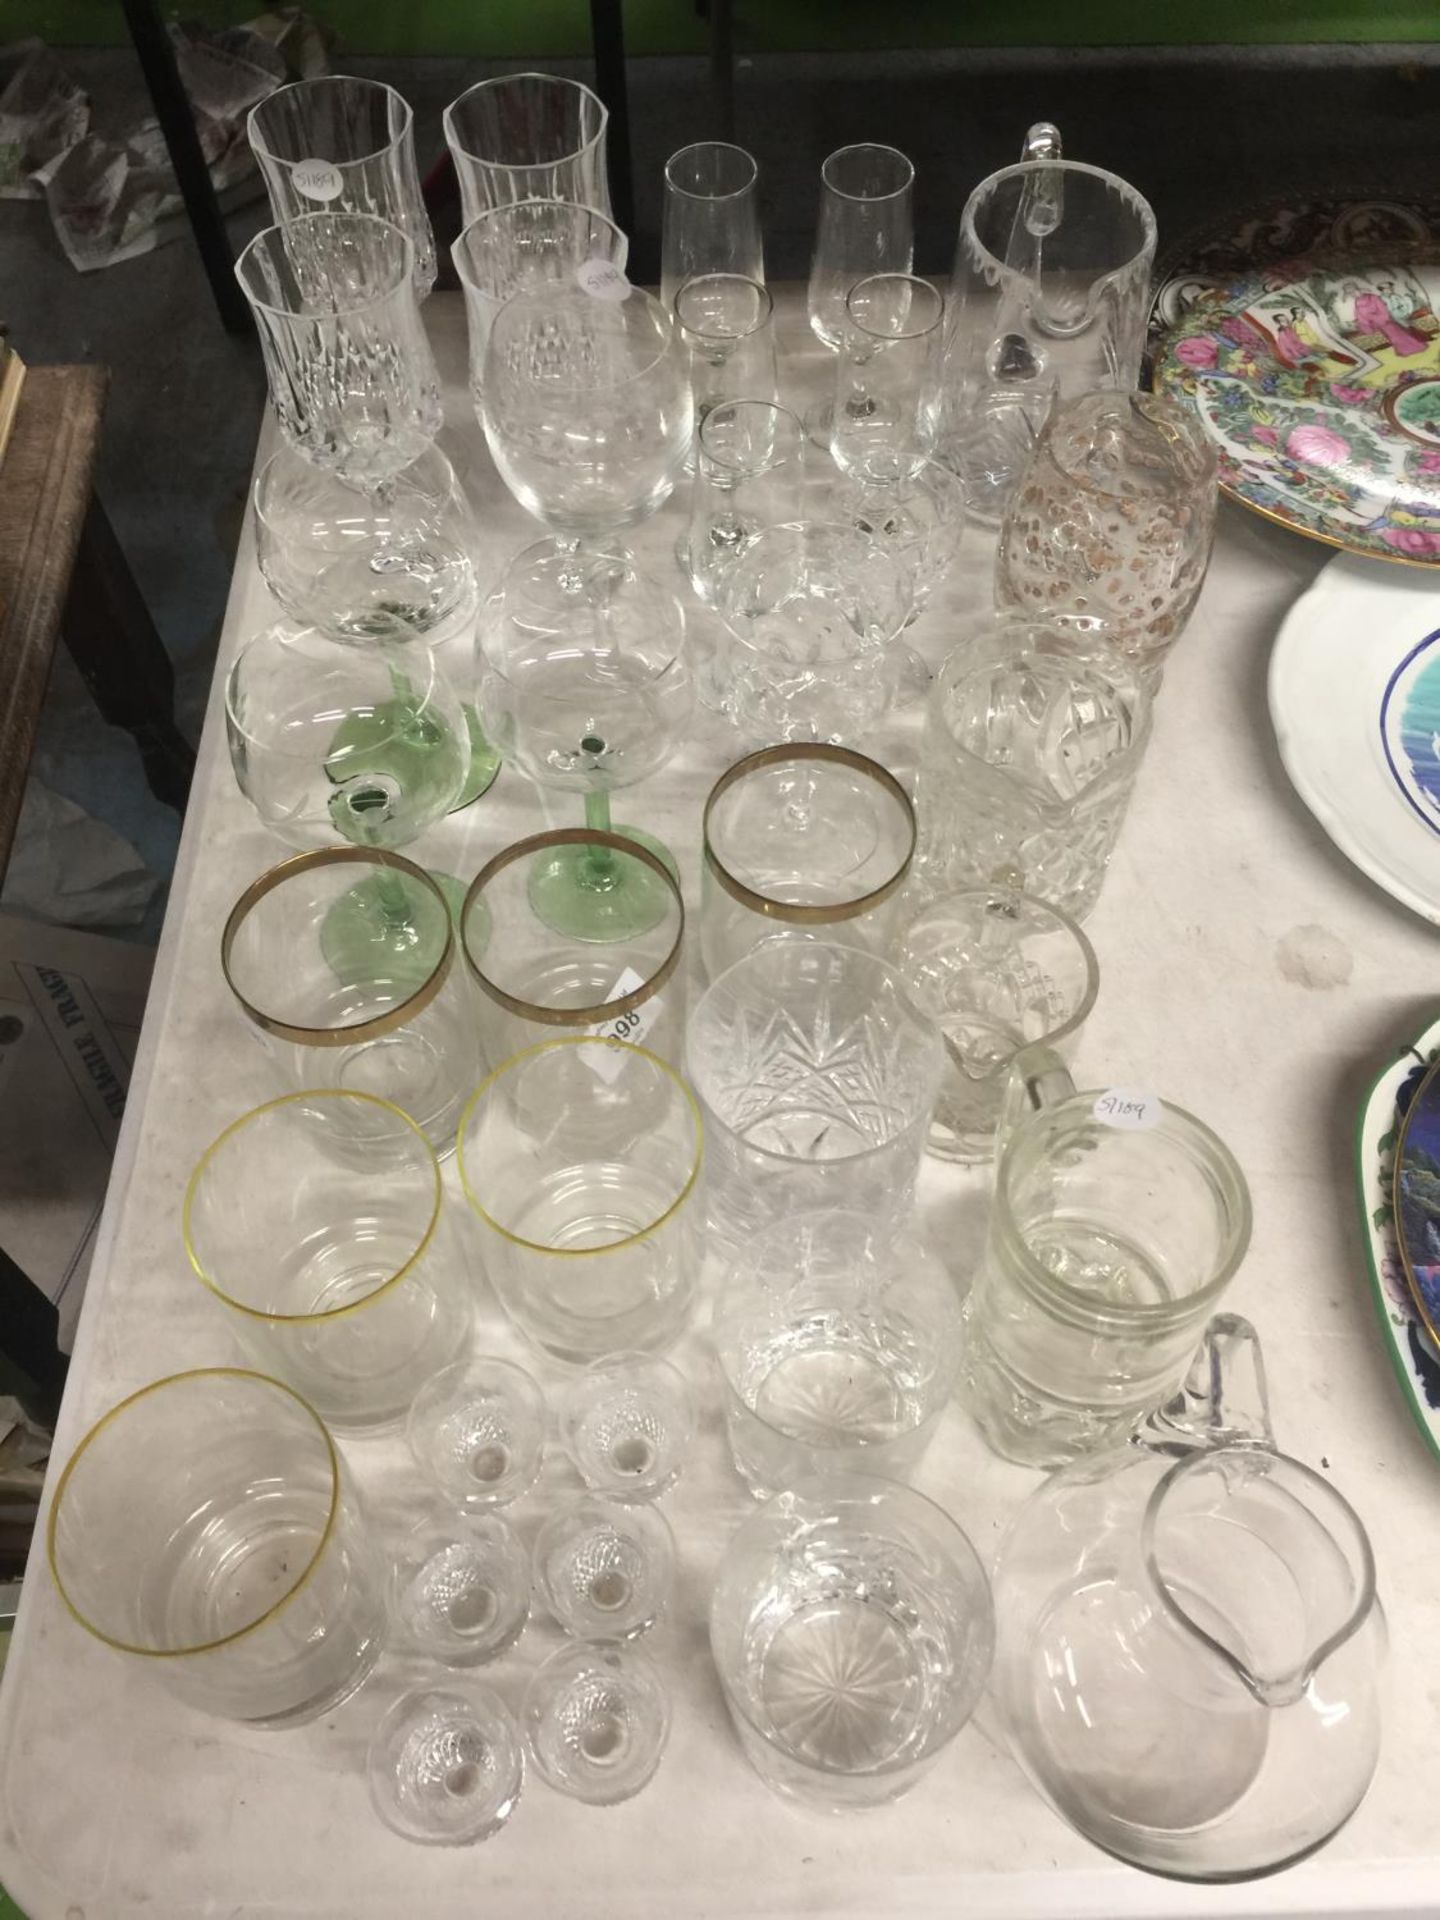 A QUANTITY OF GLASSWARE TO INCLUDE WINE GLASSES, TUMBLERS, SHOT GLASSES, ETC.,